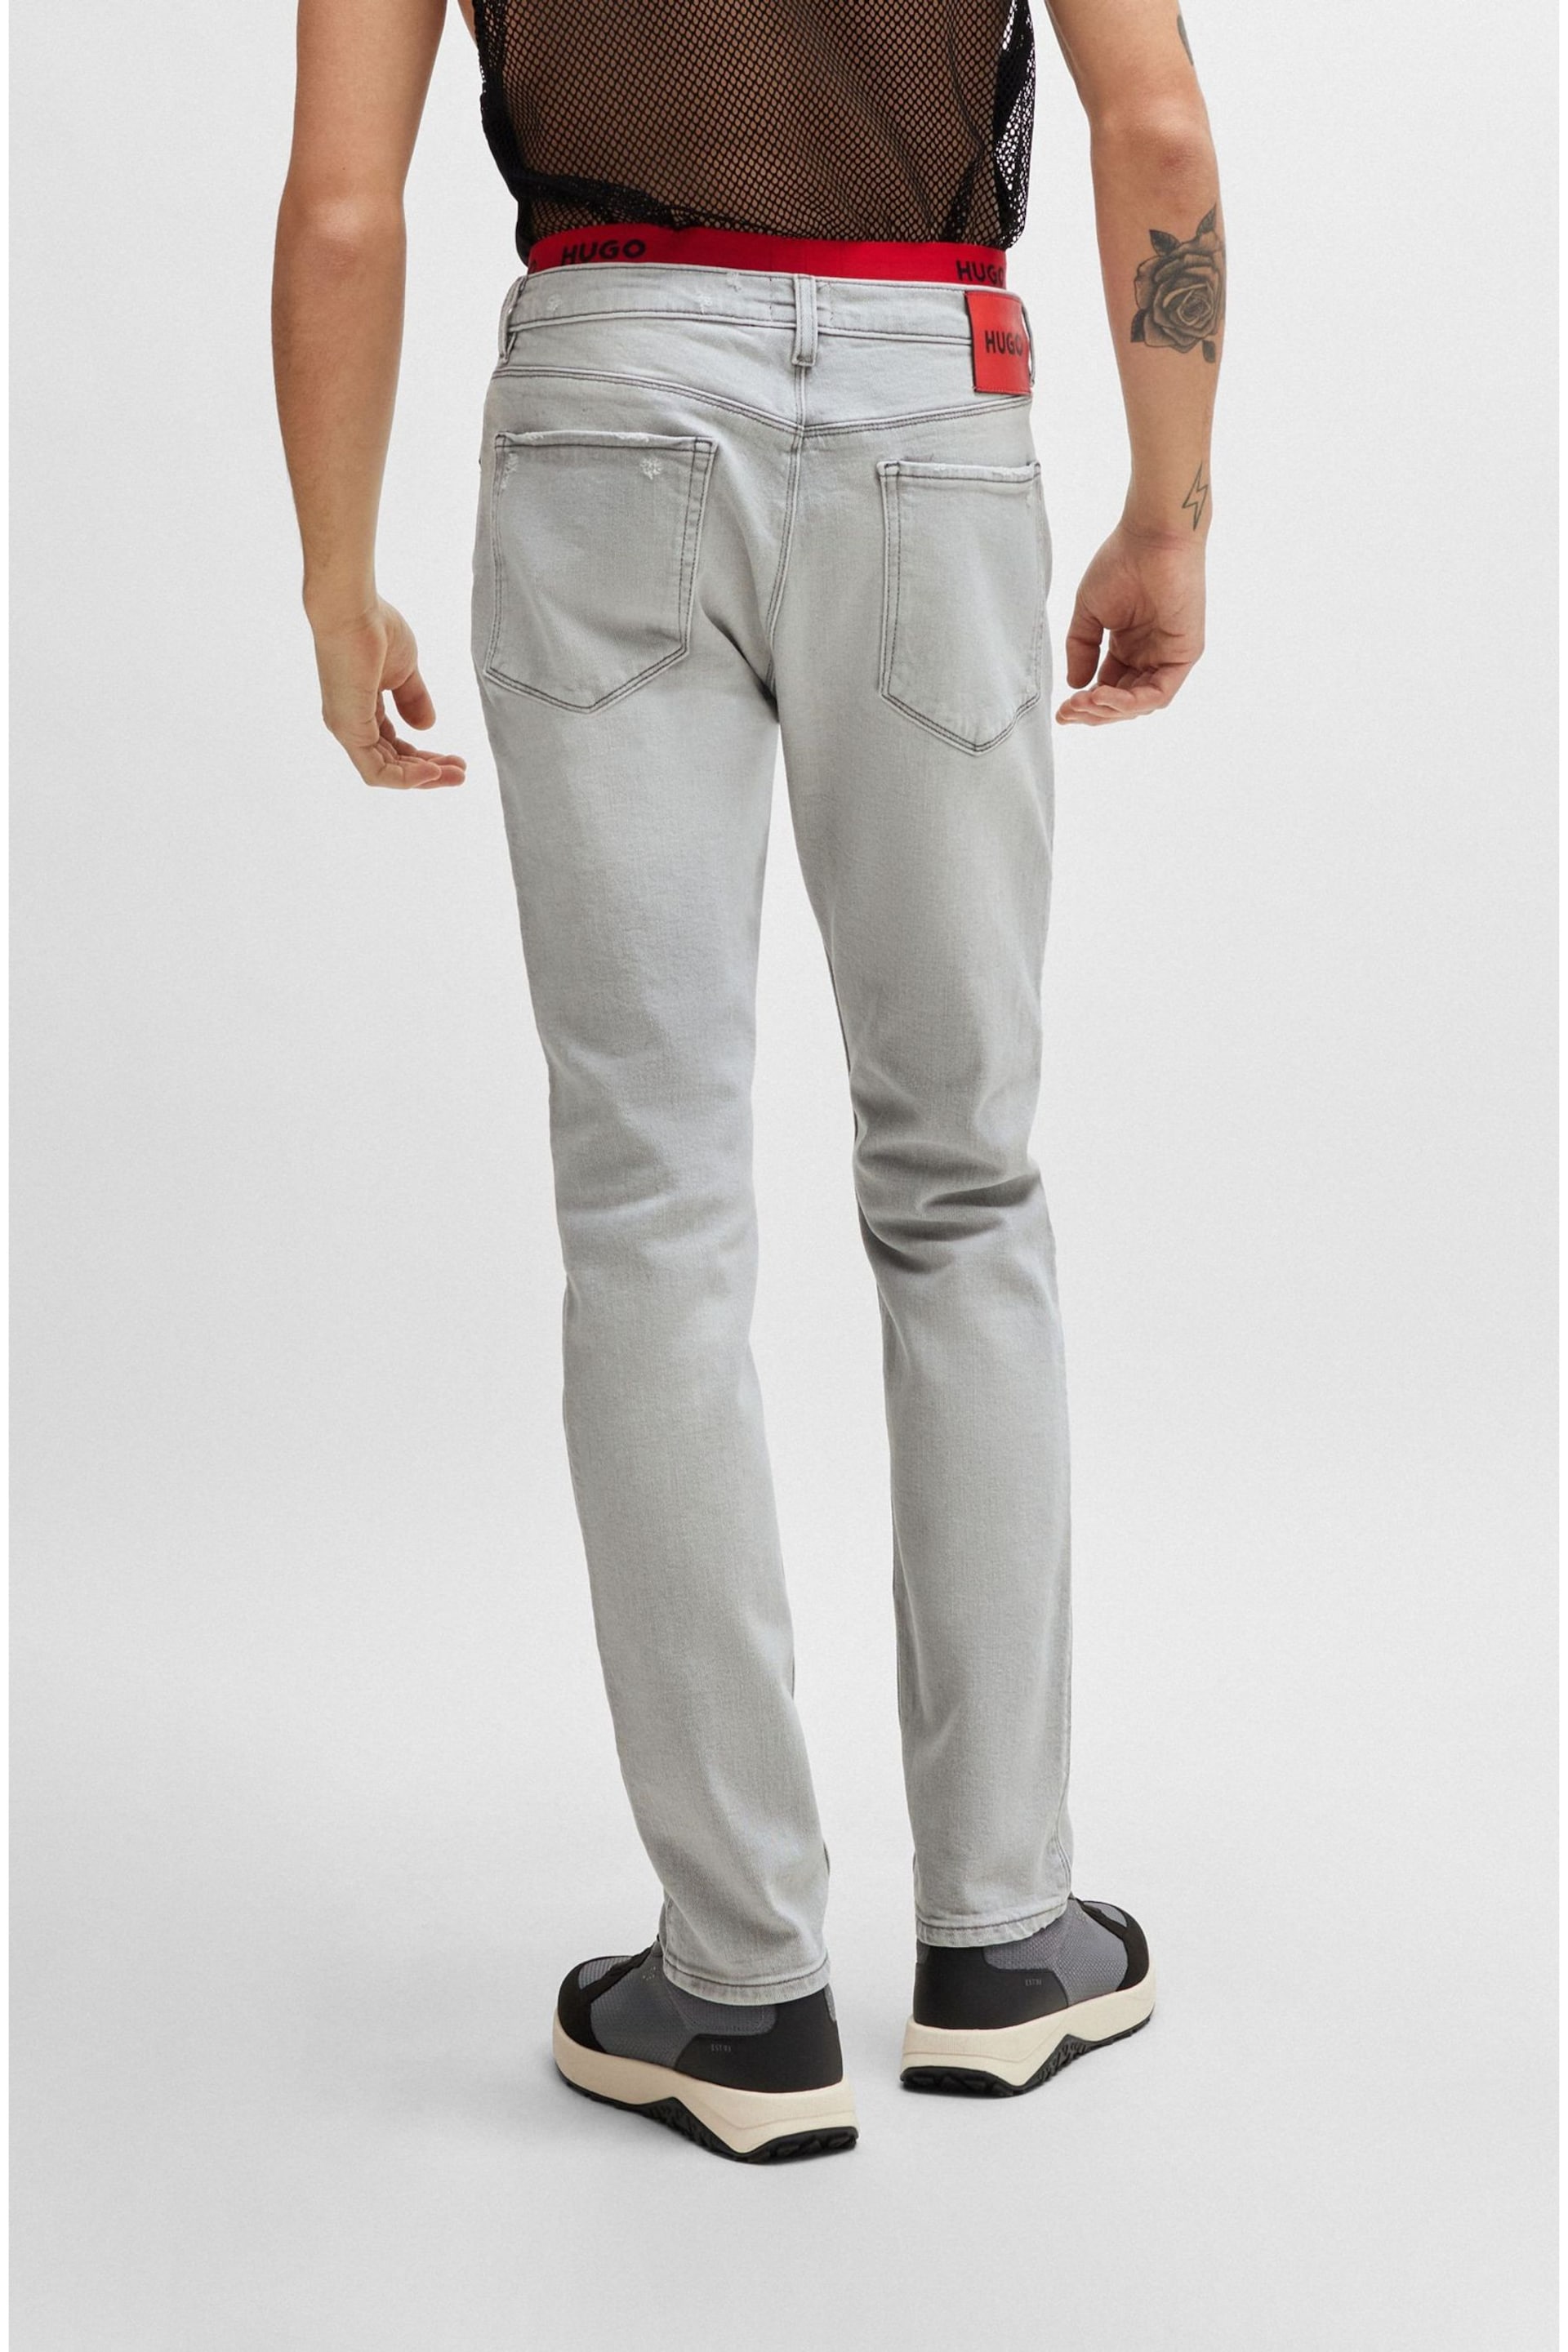 HUGO Grey Slim-Fit Jeans in Light-Grey Denim - Image 4 of 5